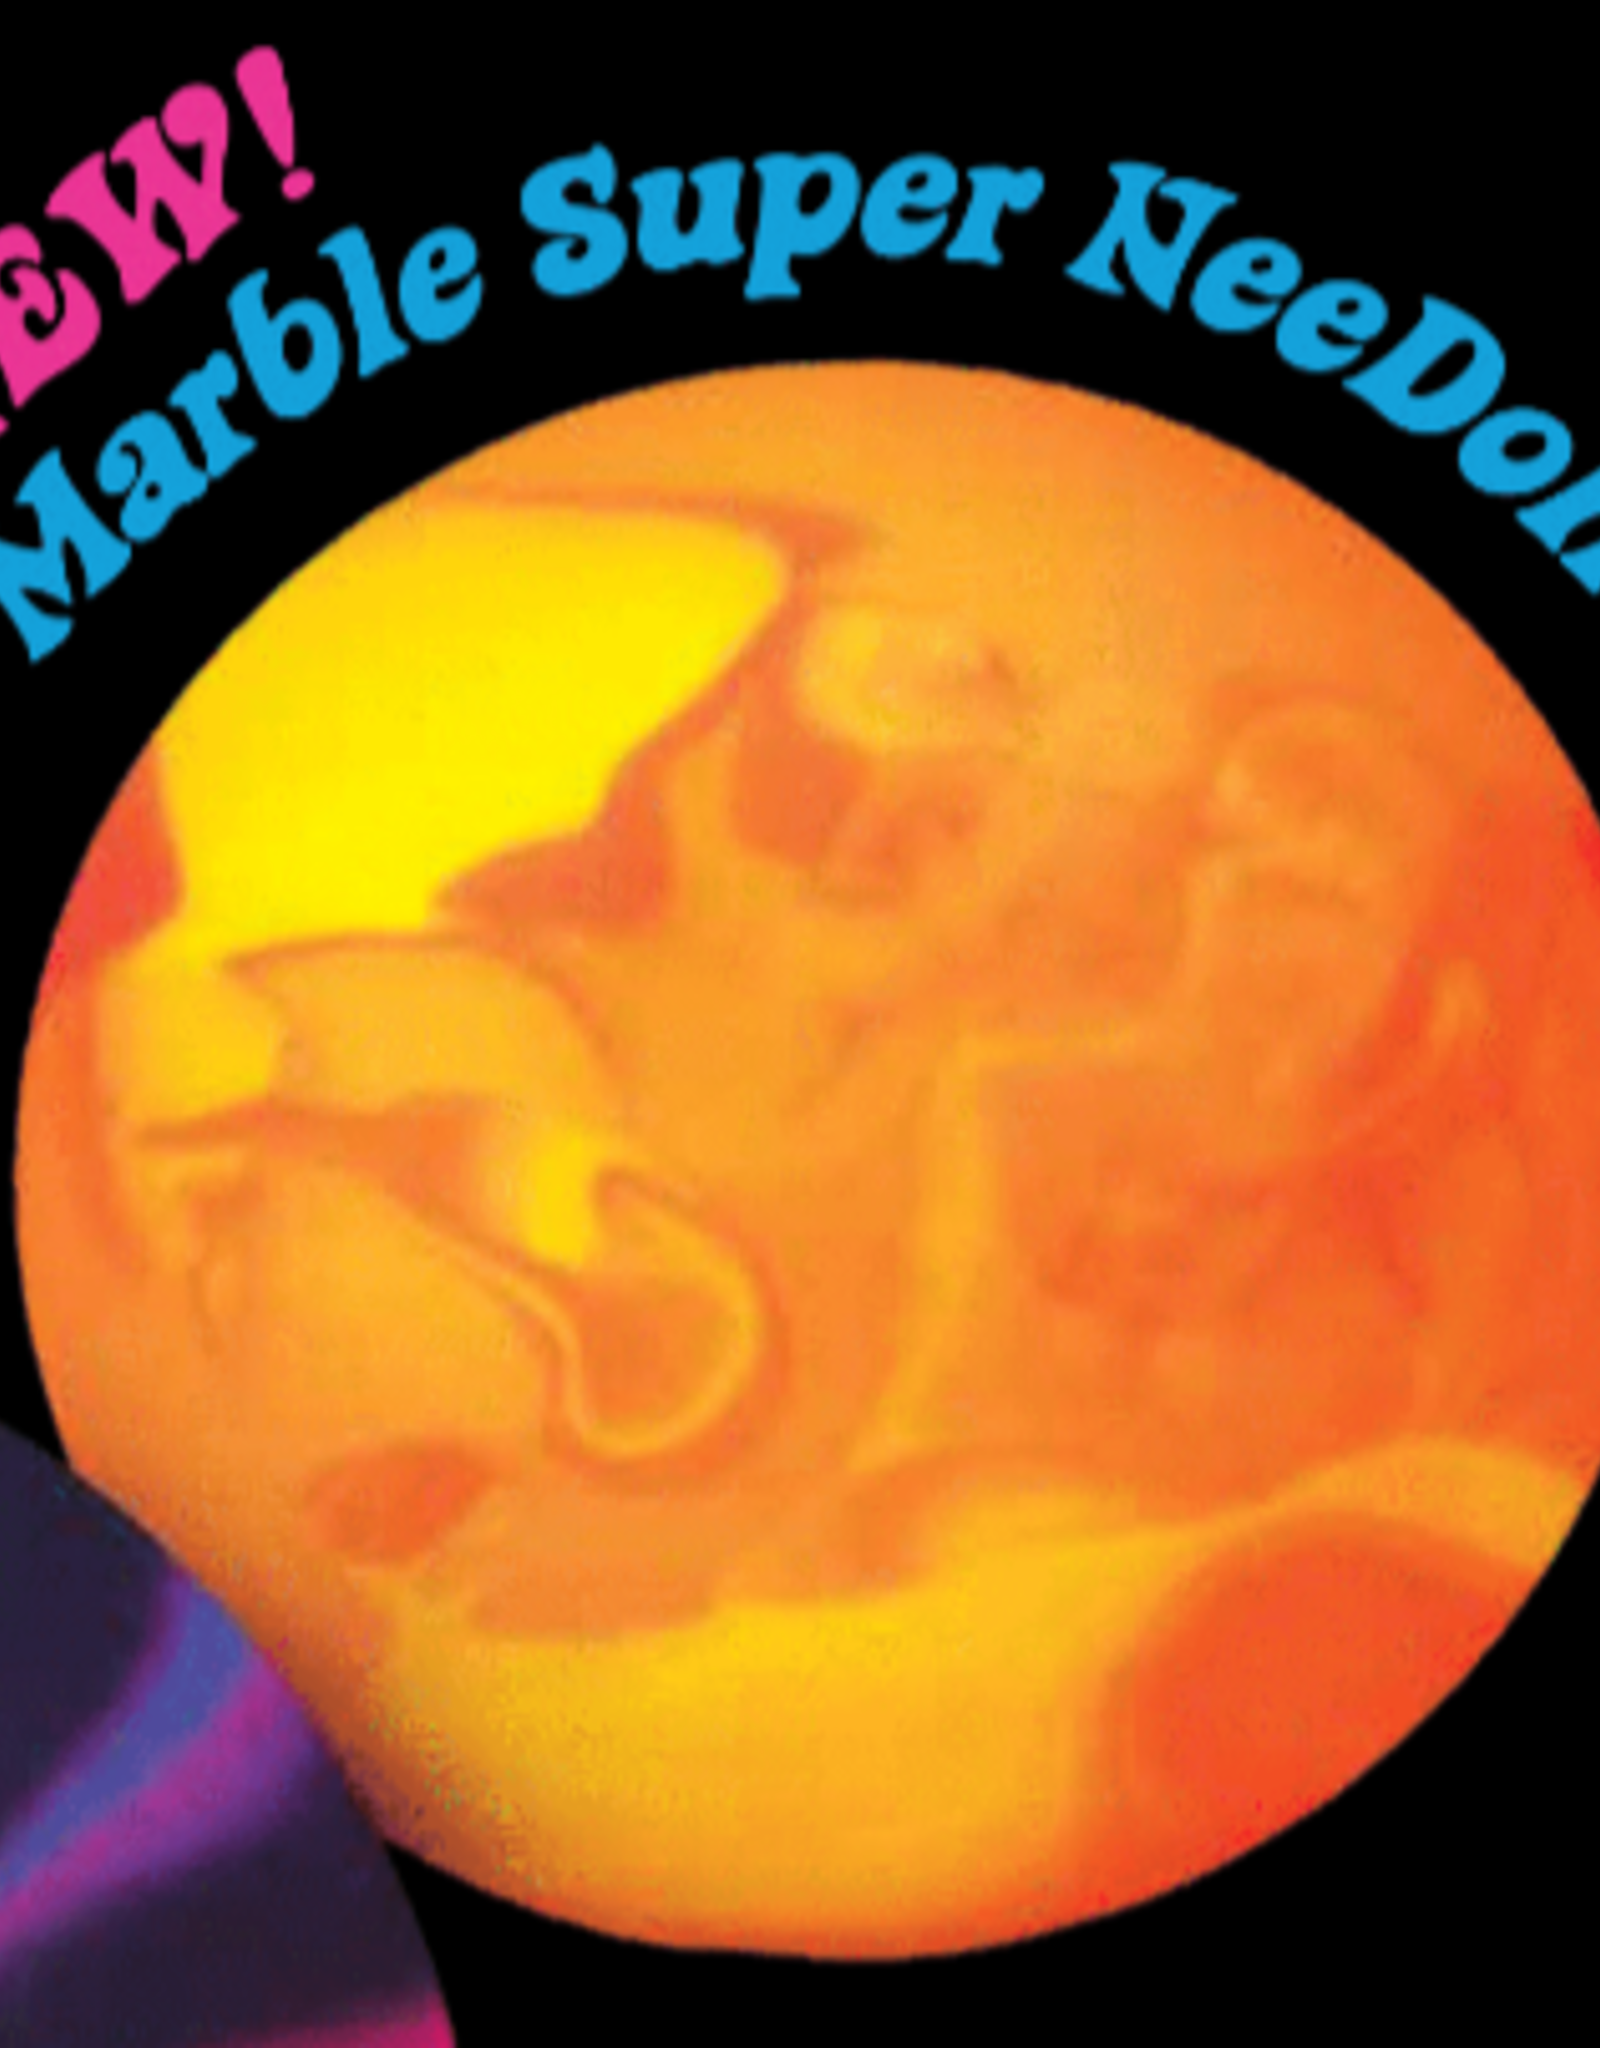 Marble Super Nee Doh